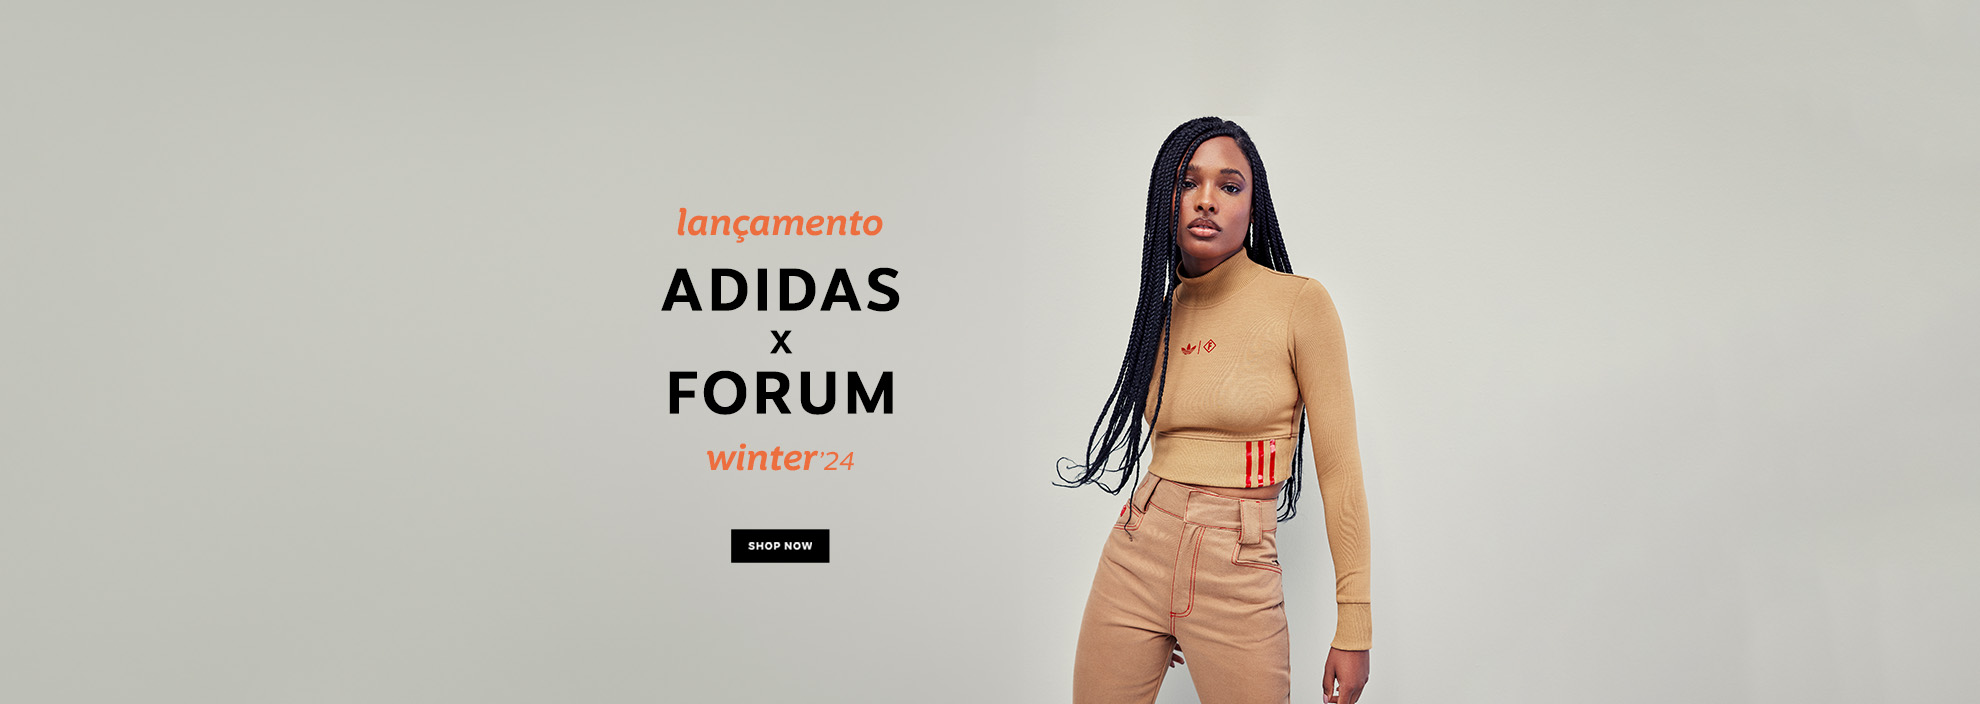 Adidas x Forum